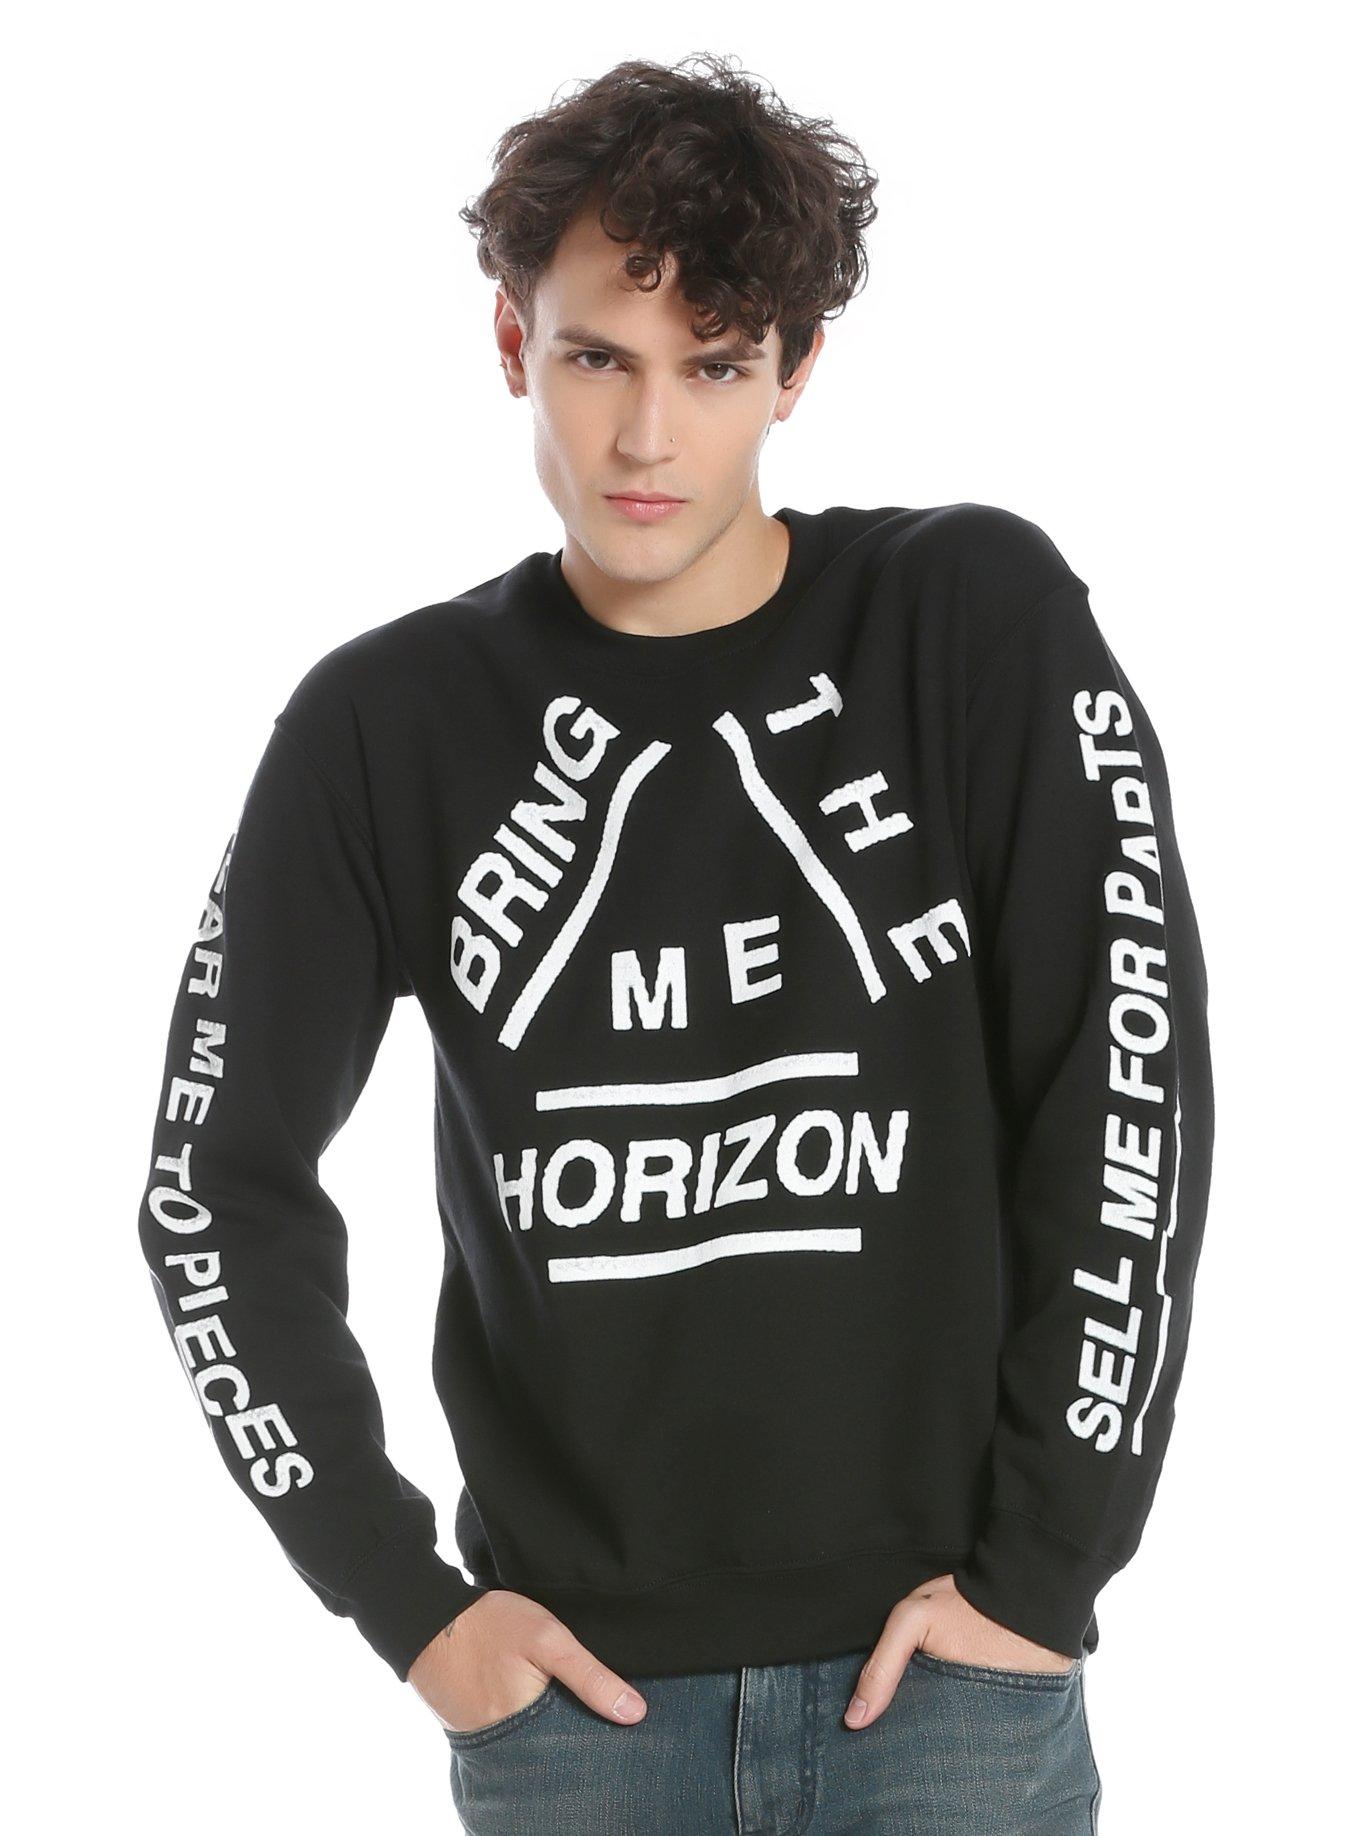 Bring Me The Horizon Doomed Sweatshirt